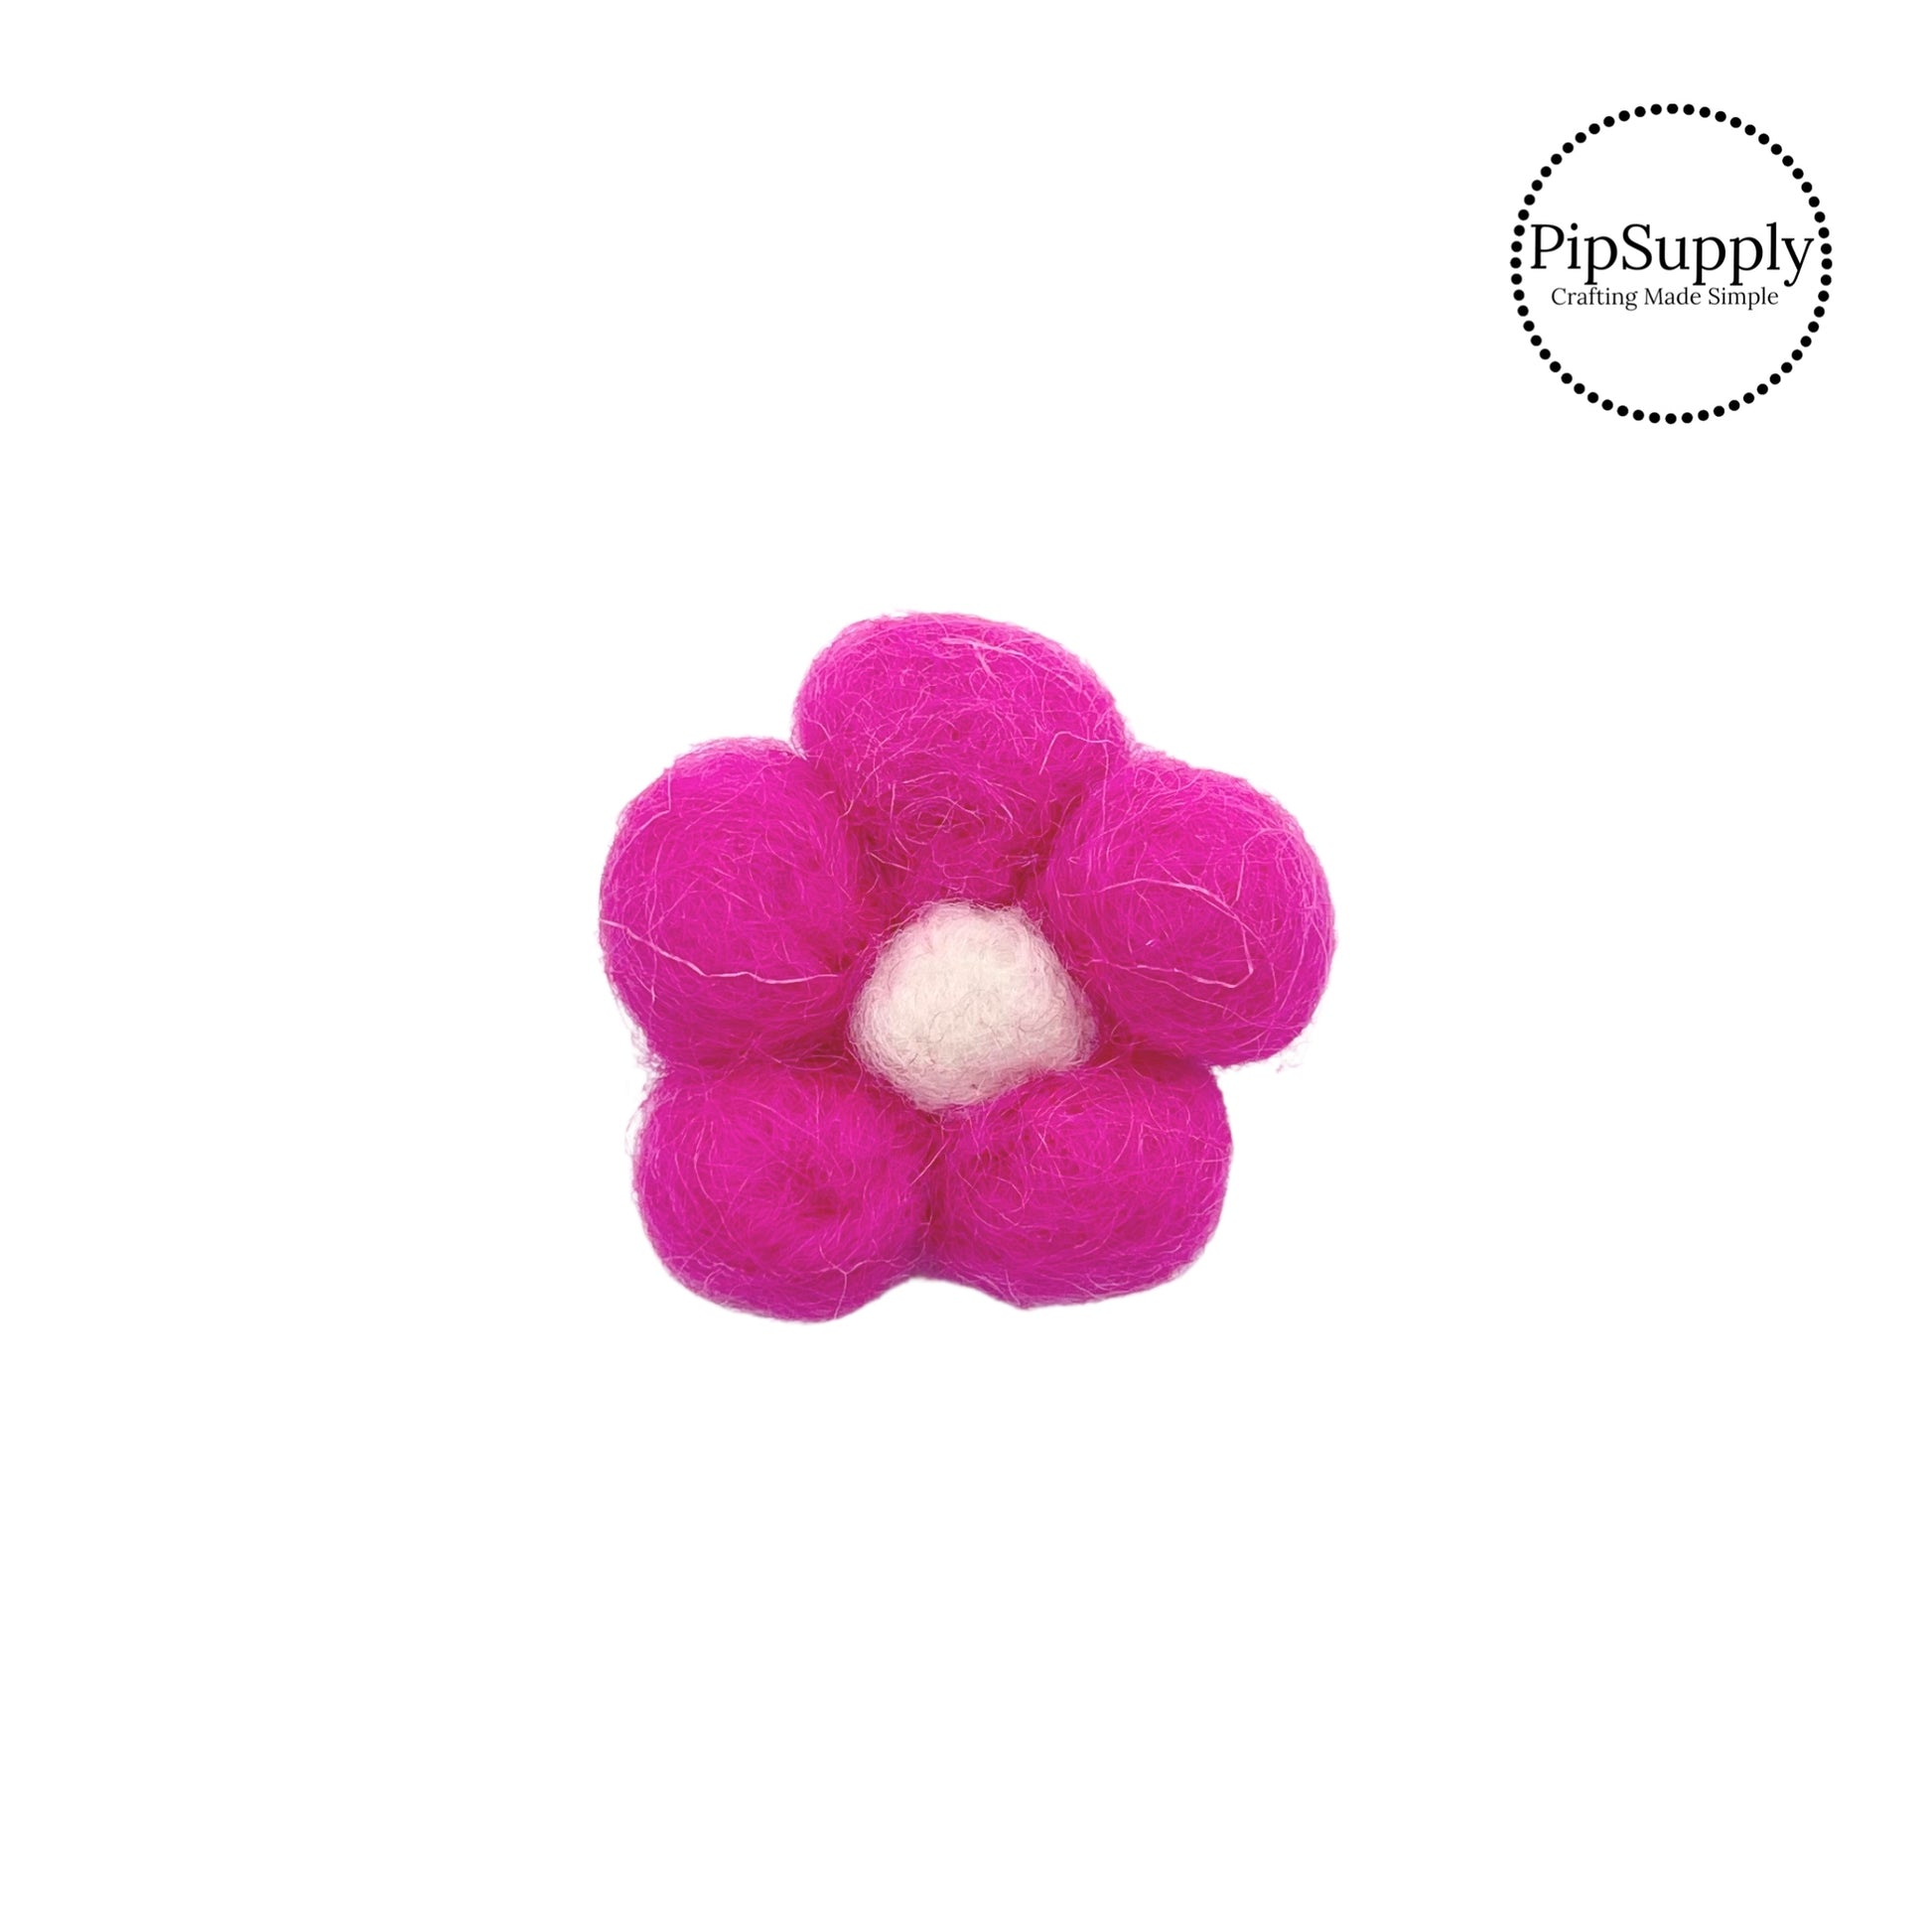 Bubble pink flower with white center felt embellishment